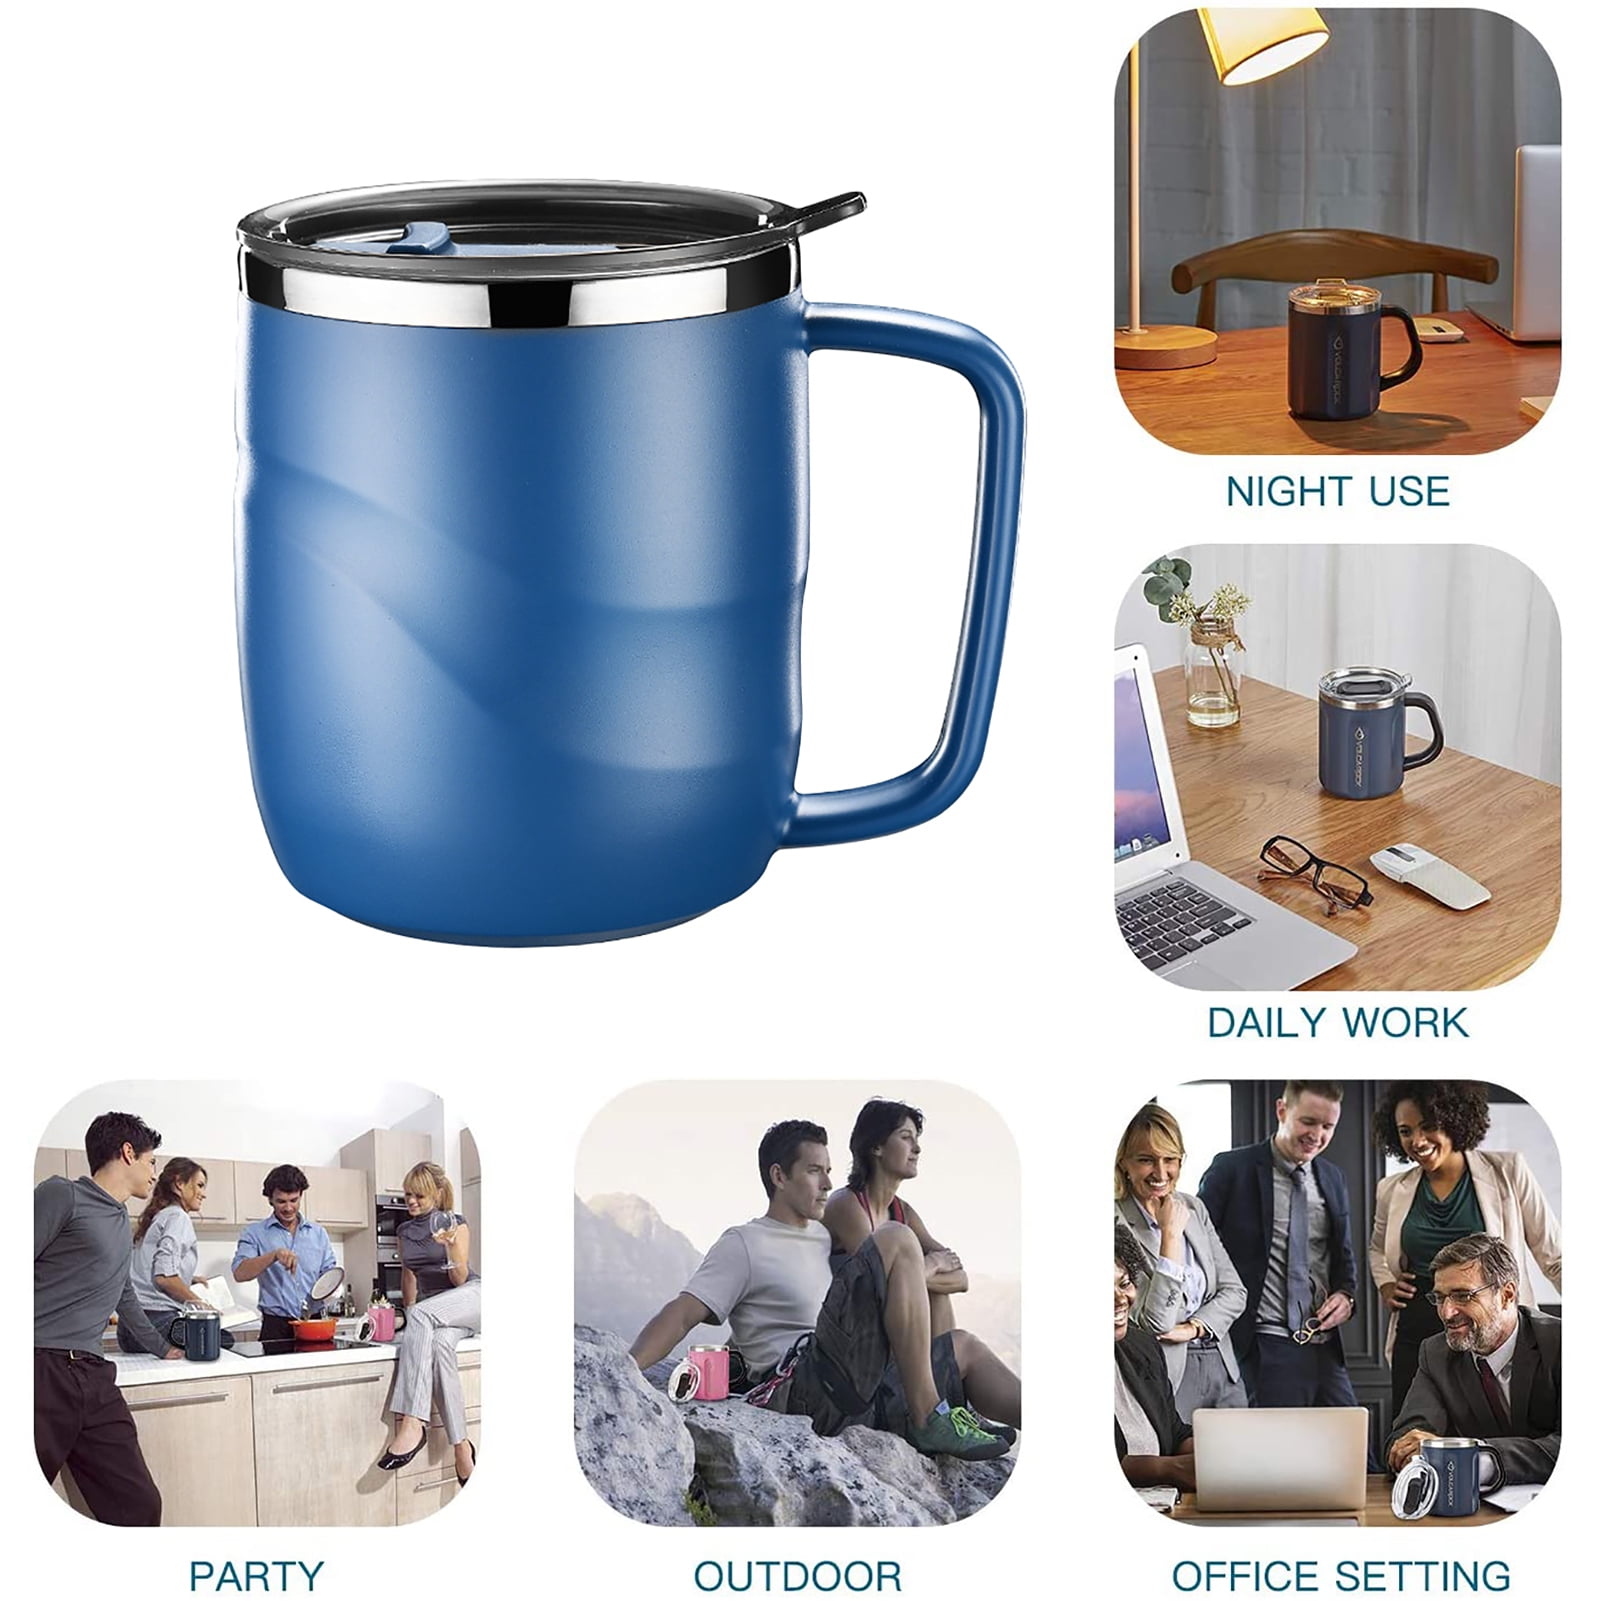 Idoker Coffee Mug Insulated Coffee Mug with Handle Stainless Steel Coffee Mug with Lip Reusable Insulated Mug Coffee Tumbler Thermos Tea Cups 12oz, 35